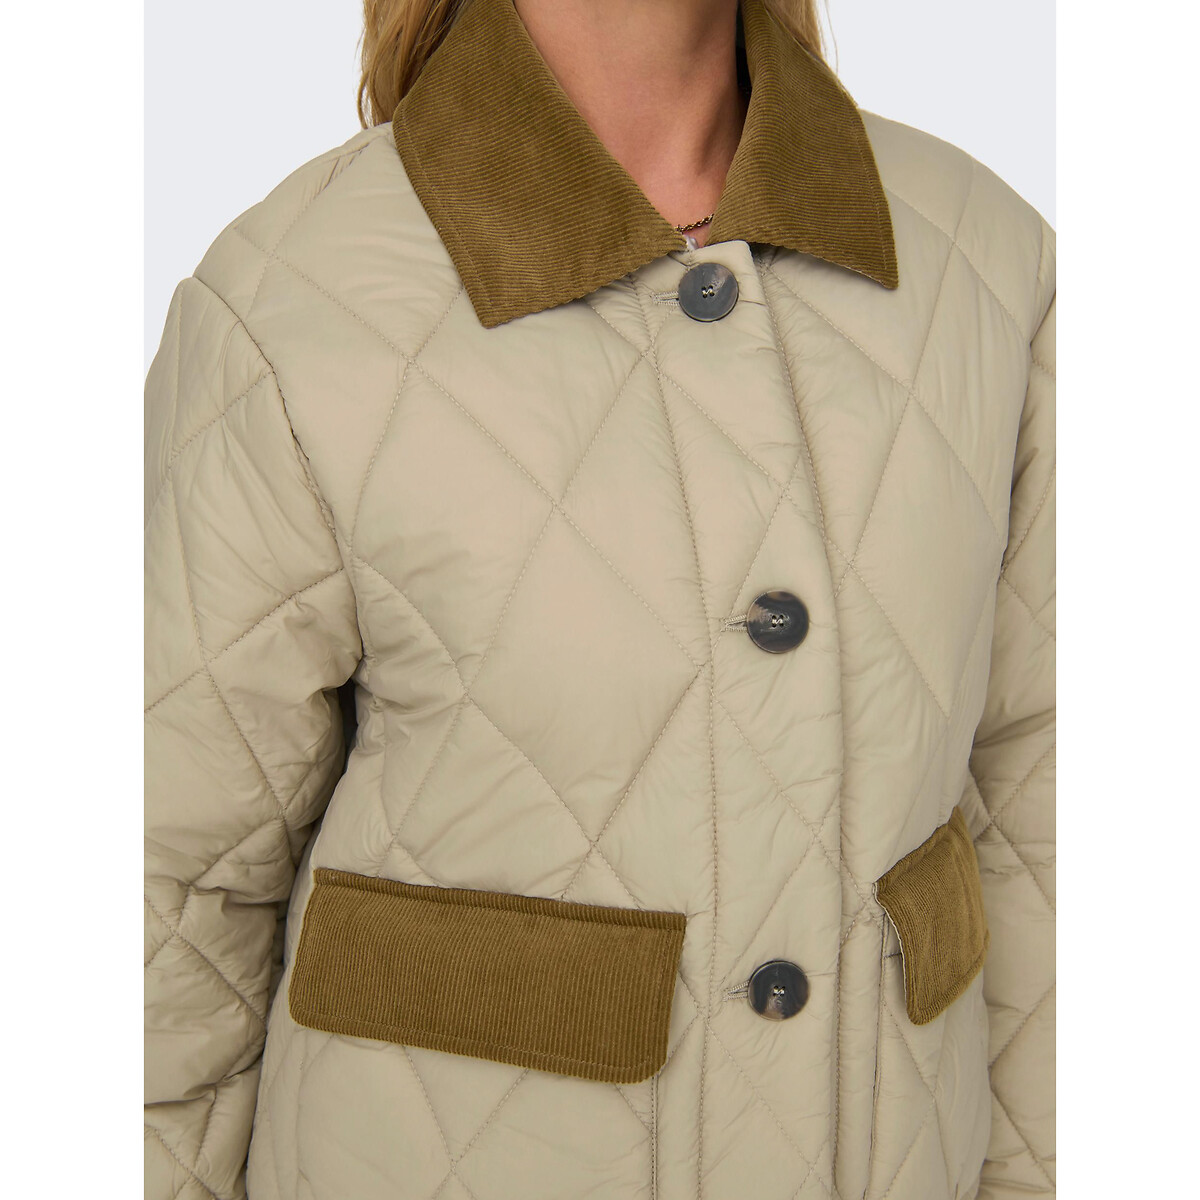 Куртка стеганая короткая  XL бежевый LaRedoute, размер XL - фото 3